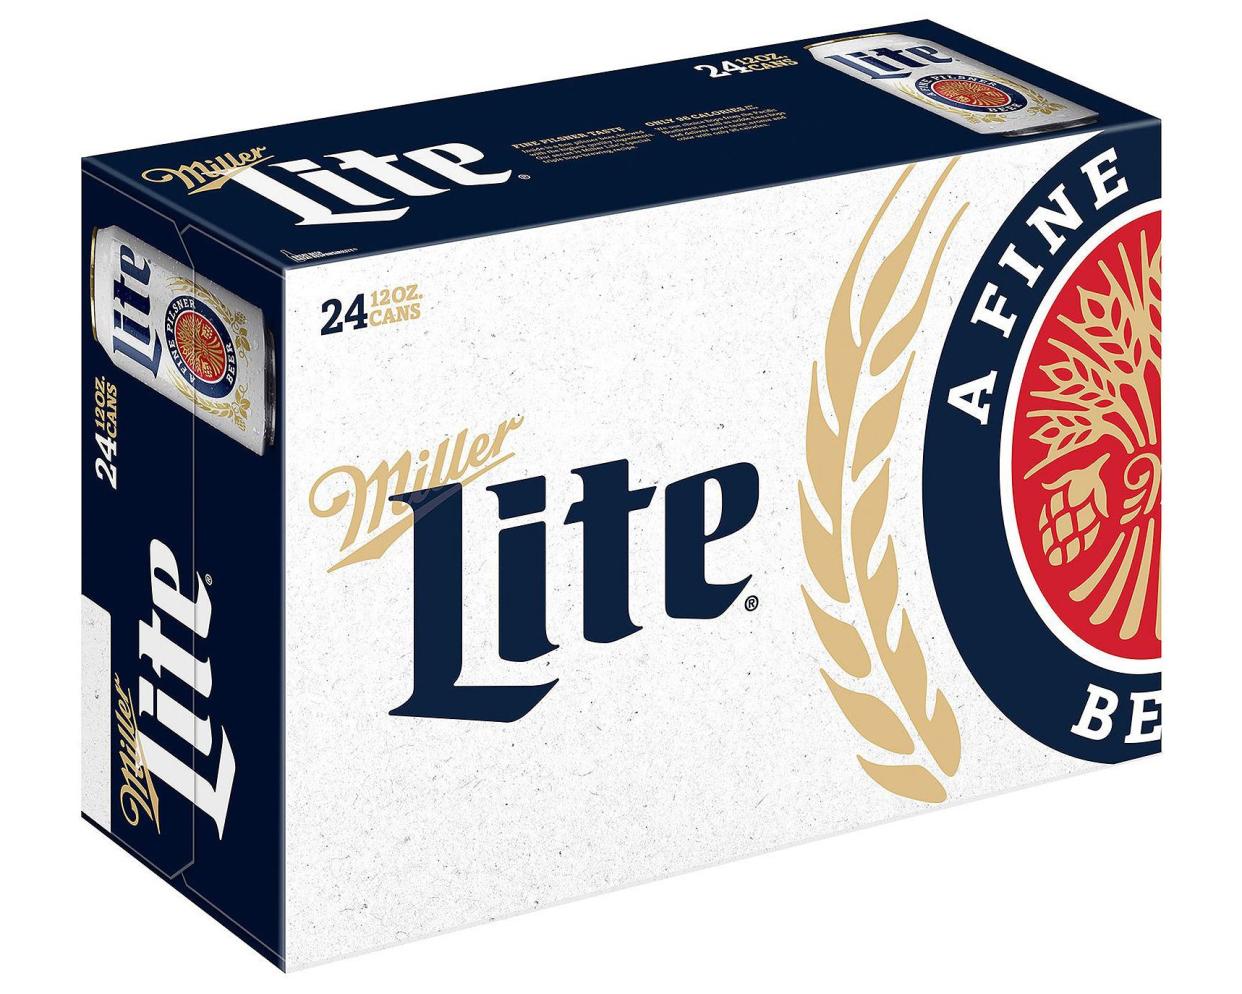 Miller Lite beer